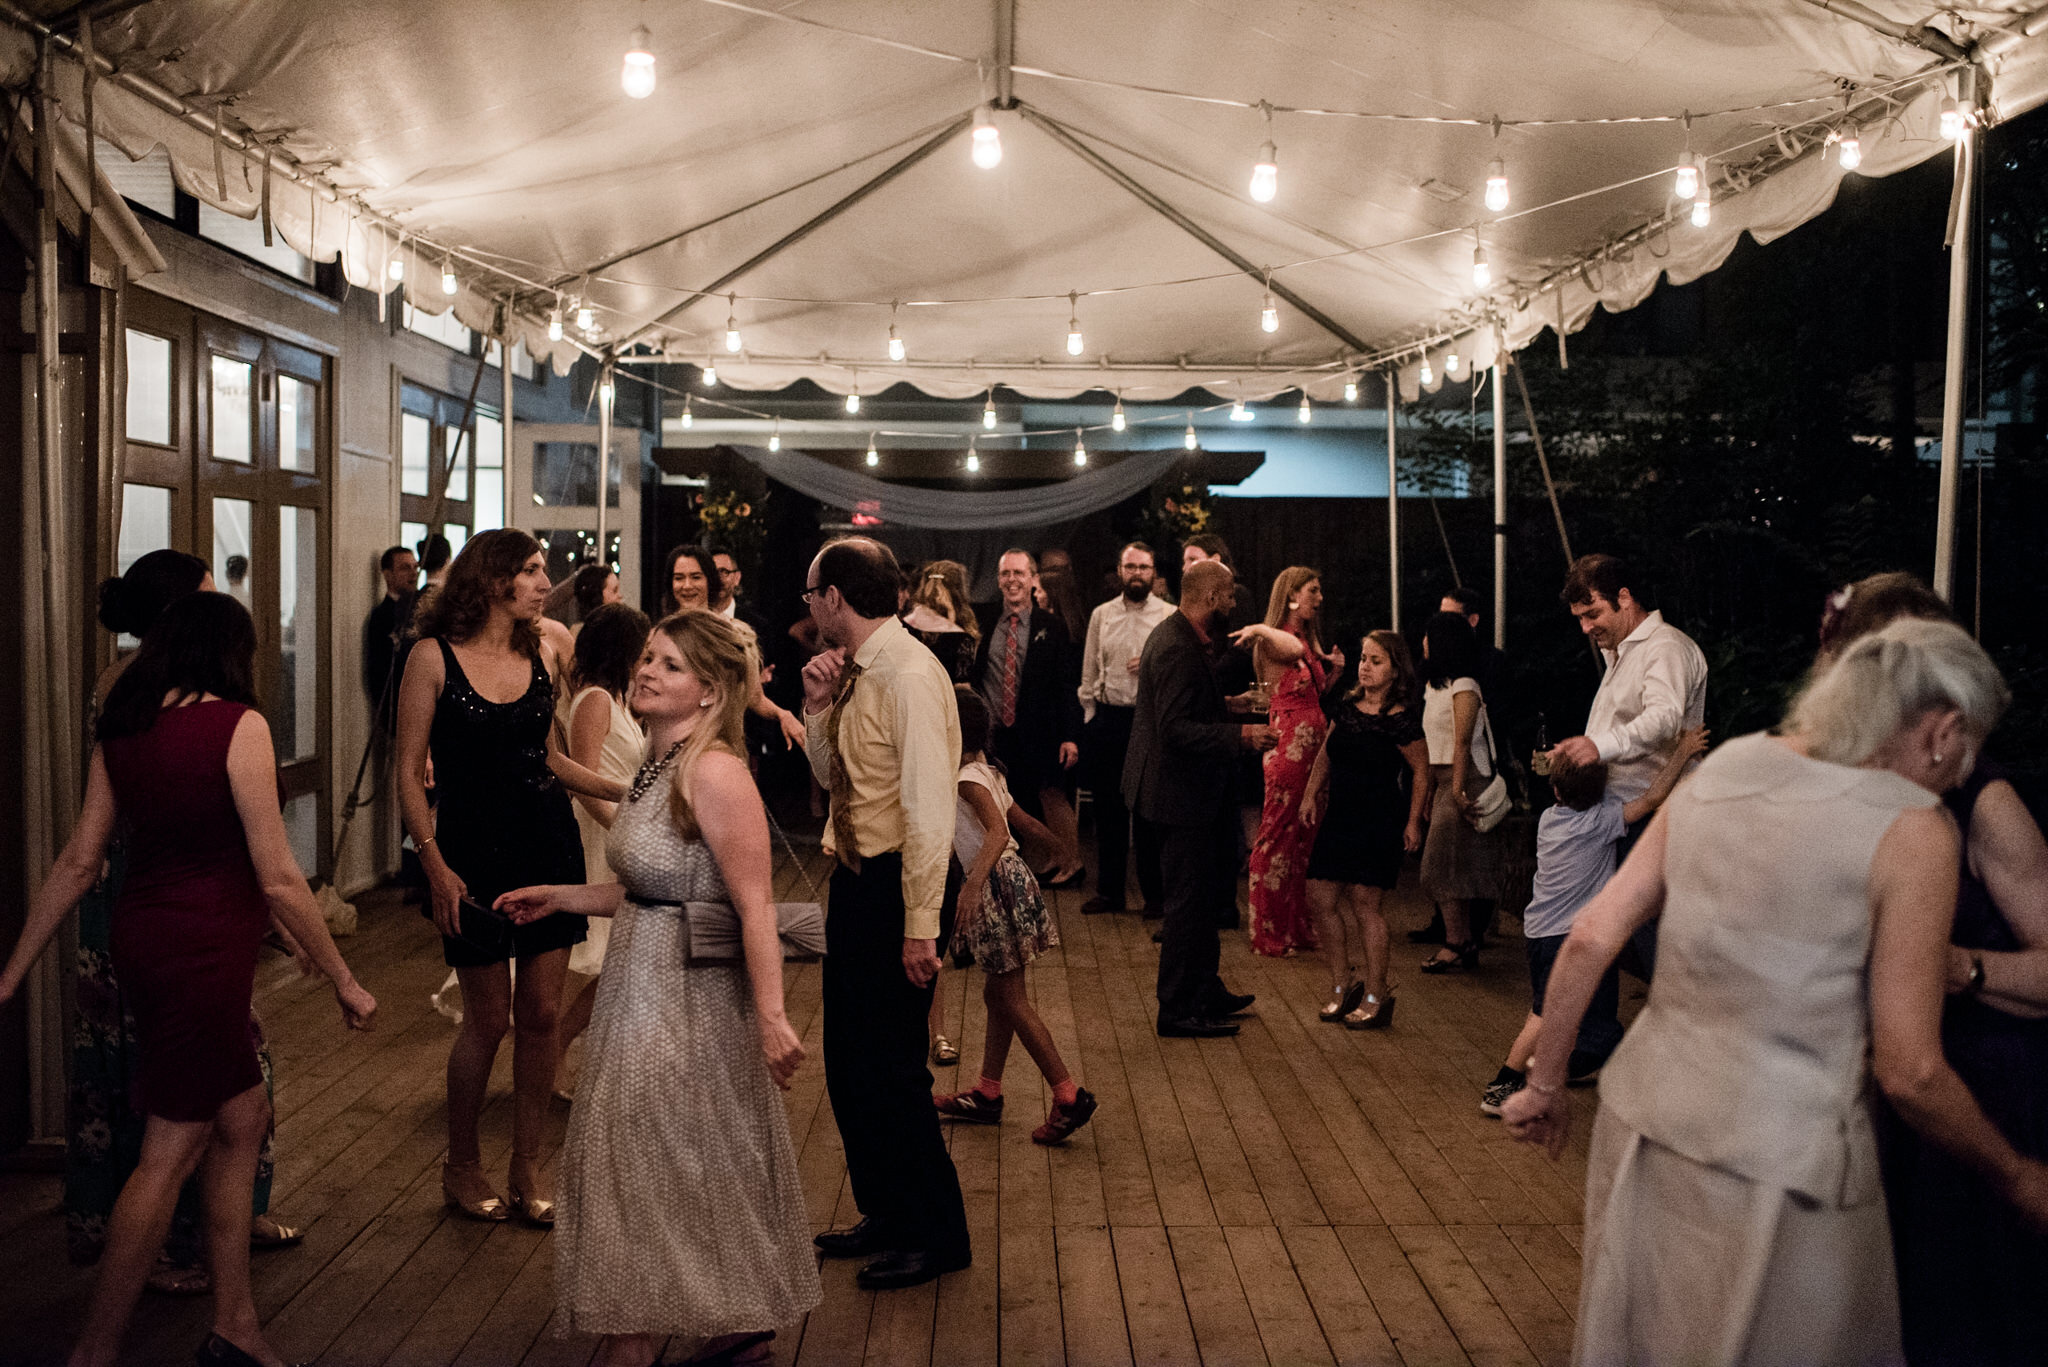 781-romantic-string-lights-wedding-tent-dance-floor-berkeley-events-fieldhouse-toronto.jpg